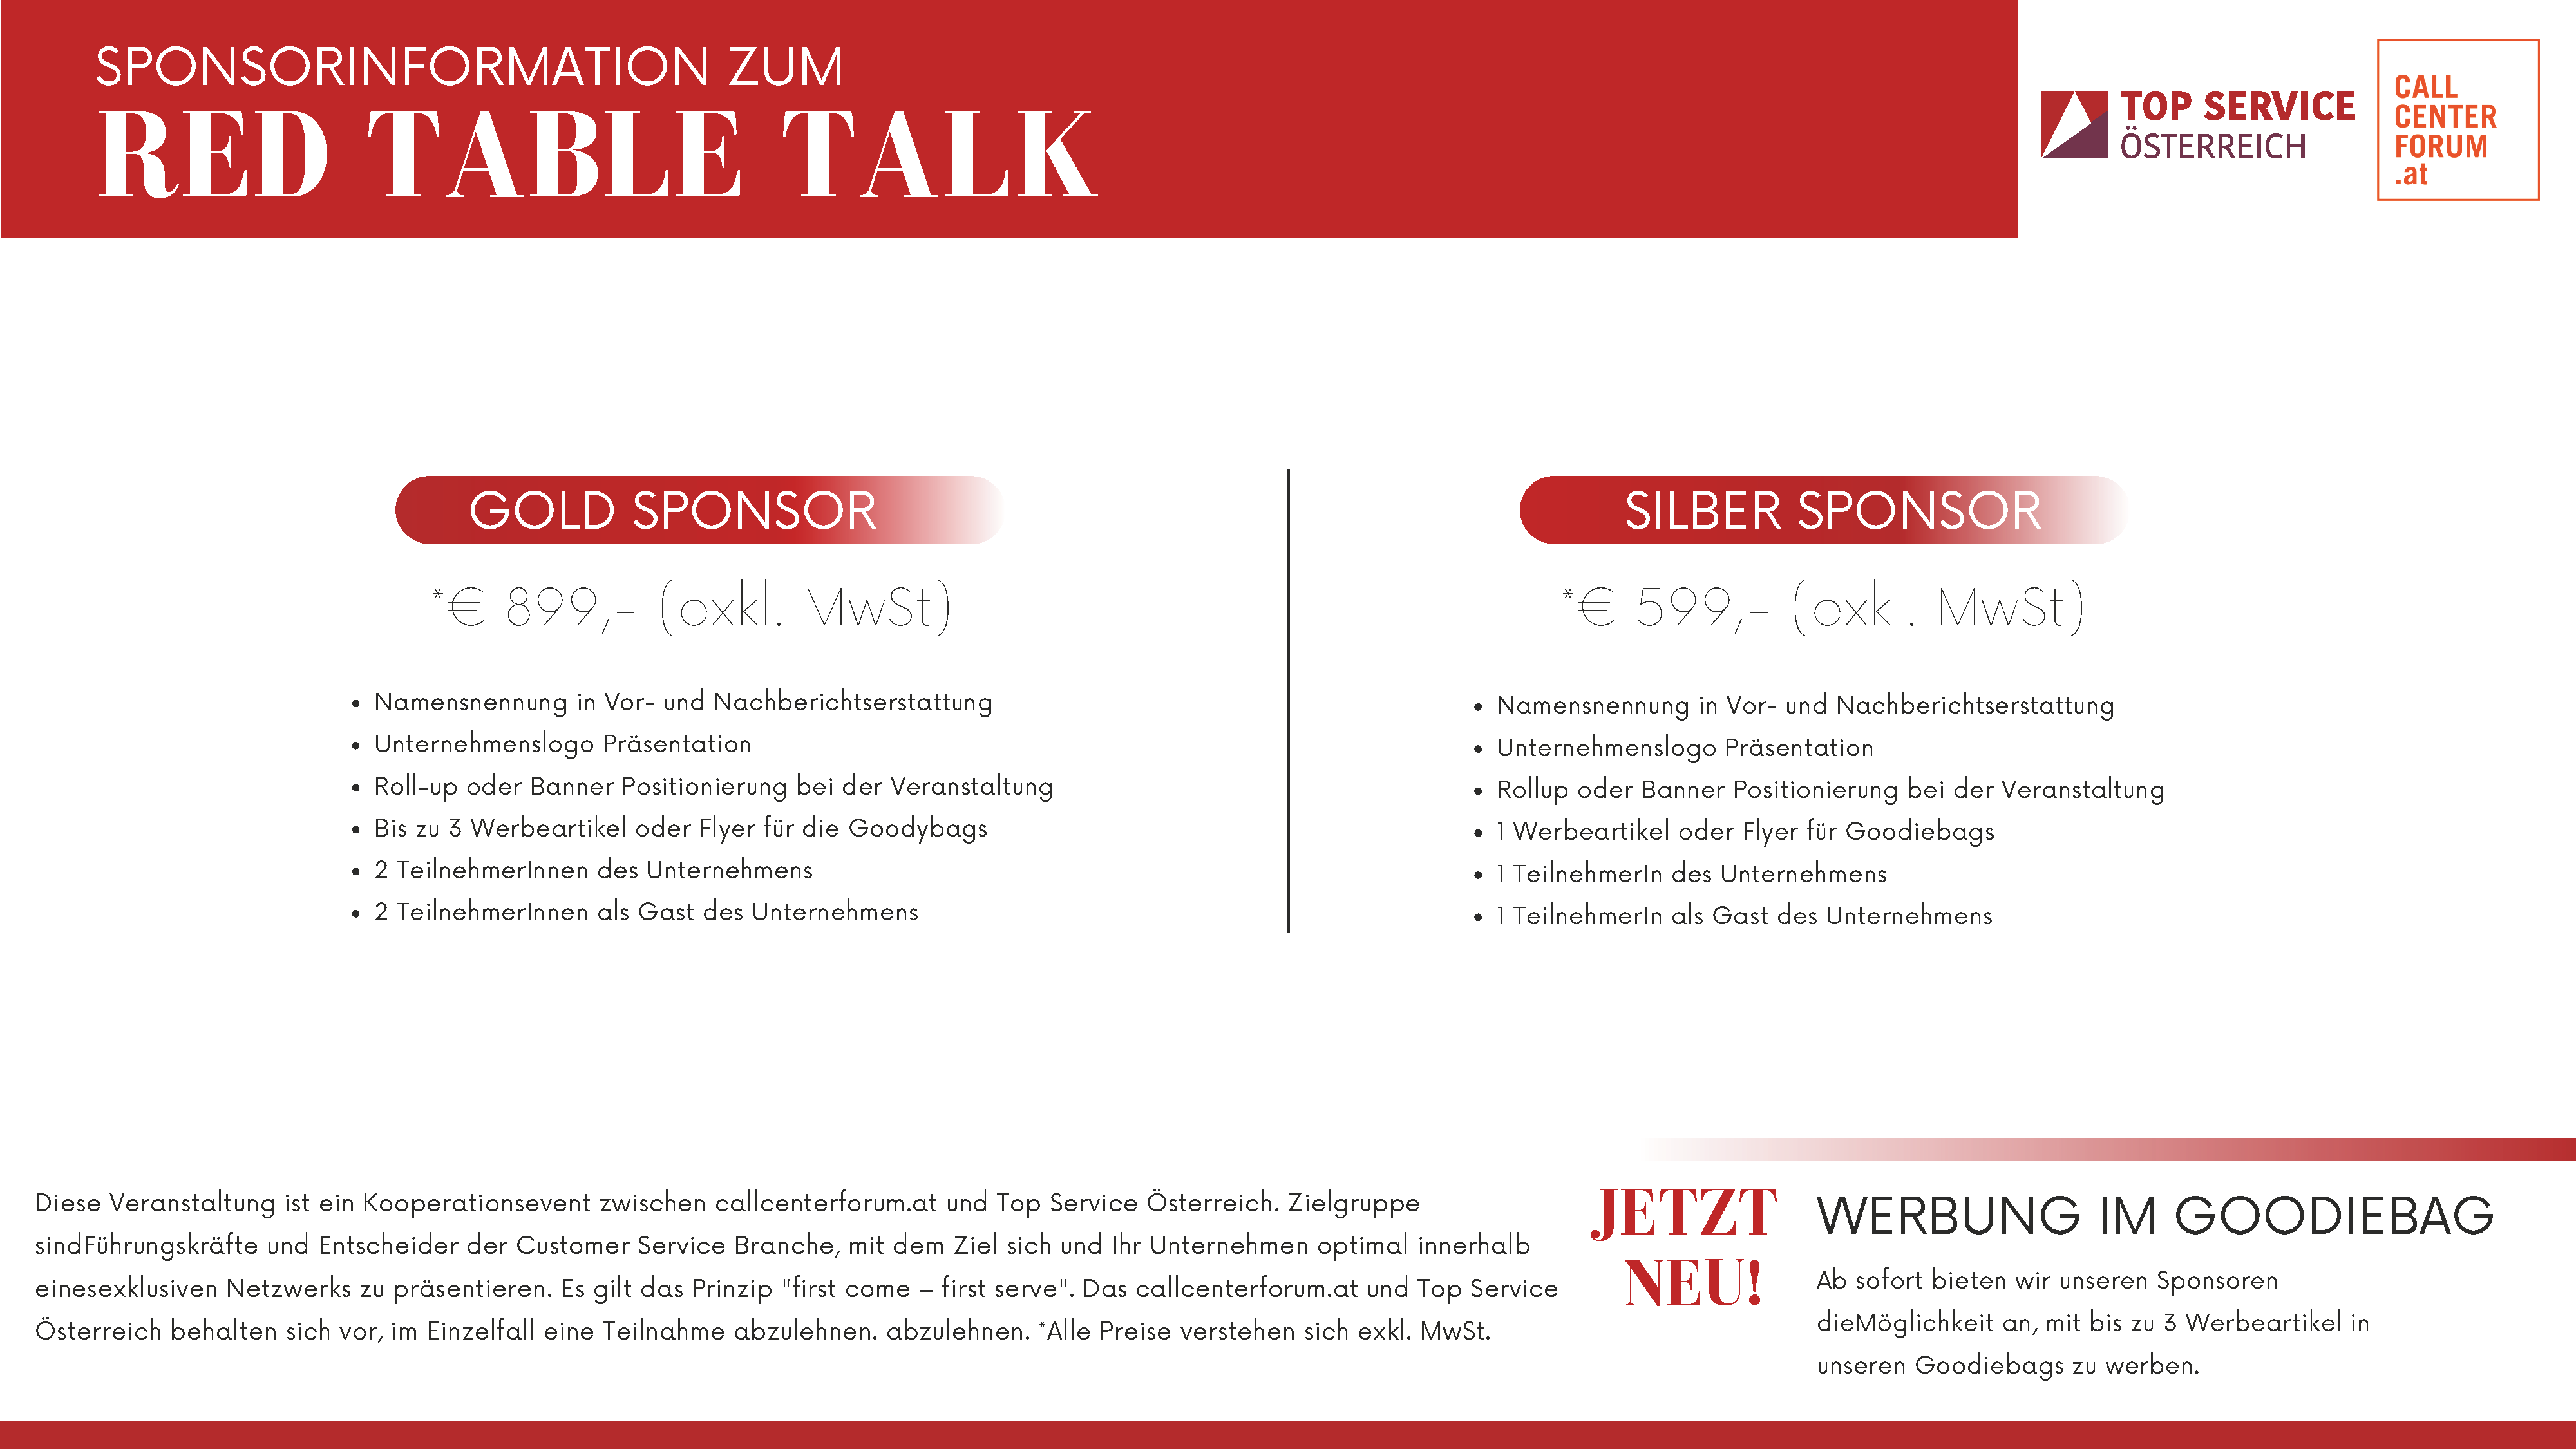 red-table-talk-sponsor-information